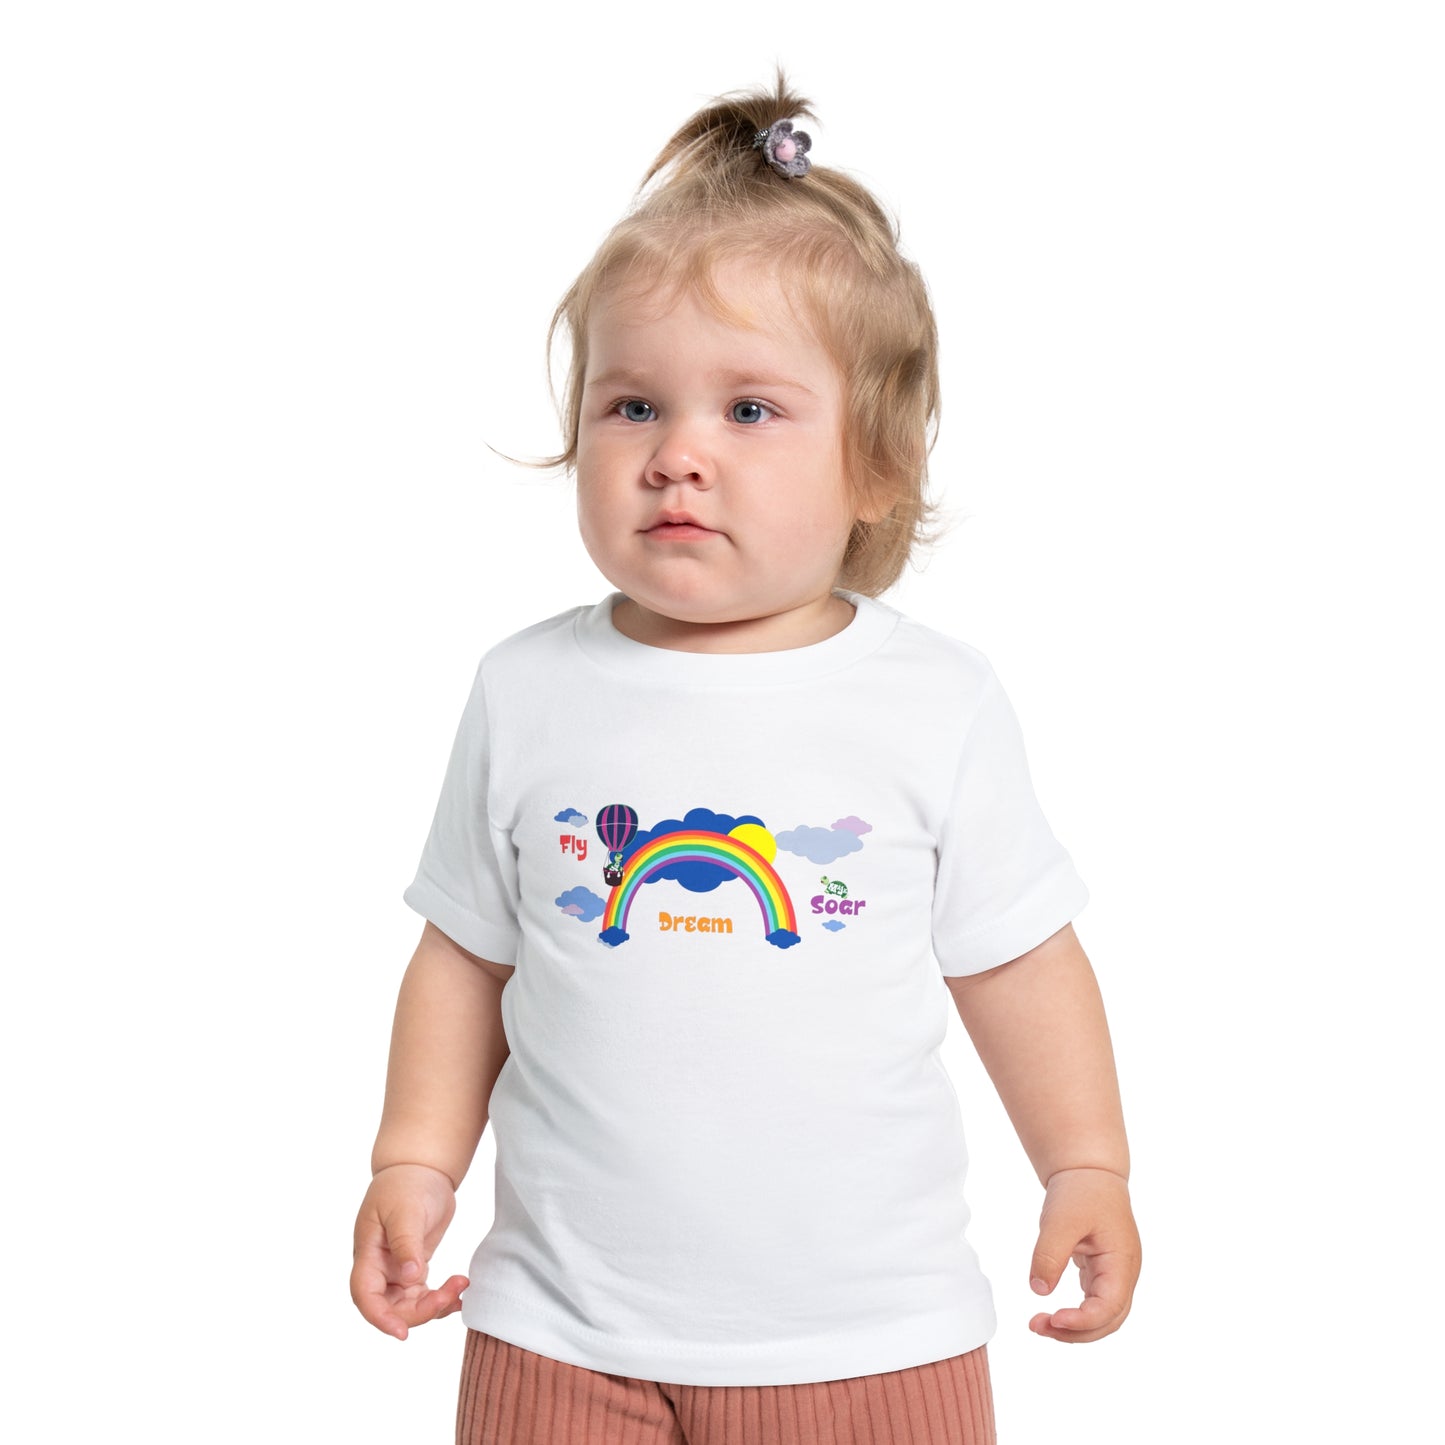 Baby Short Sleeve T-Shirt "Fly, Dream, Soar"